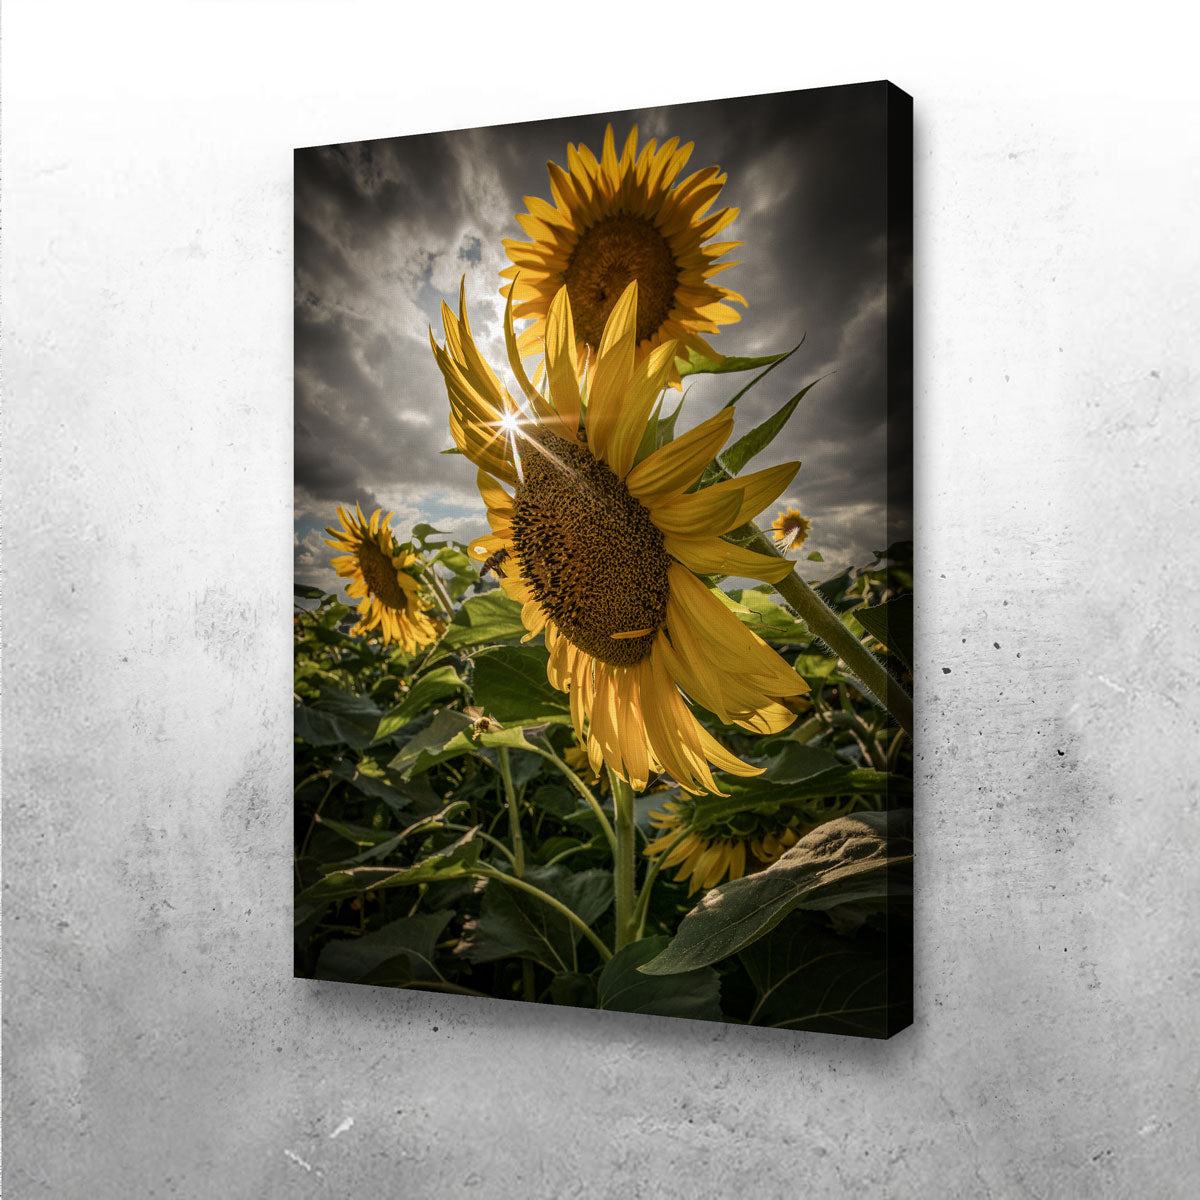 Cloudy Sunflowers